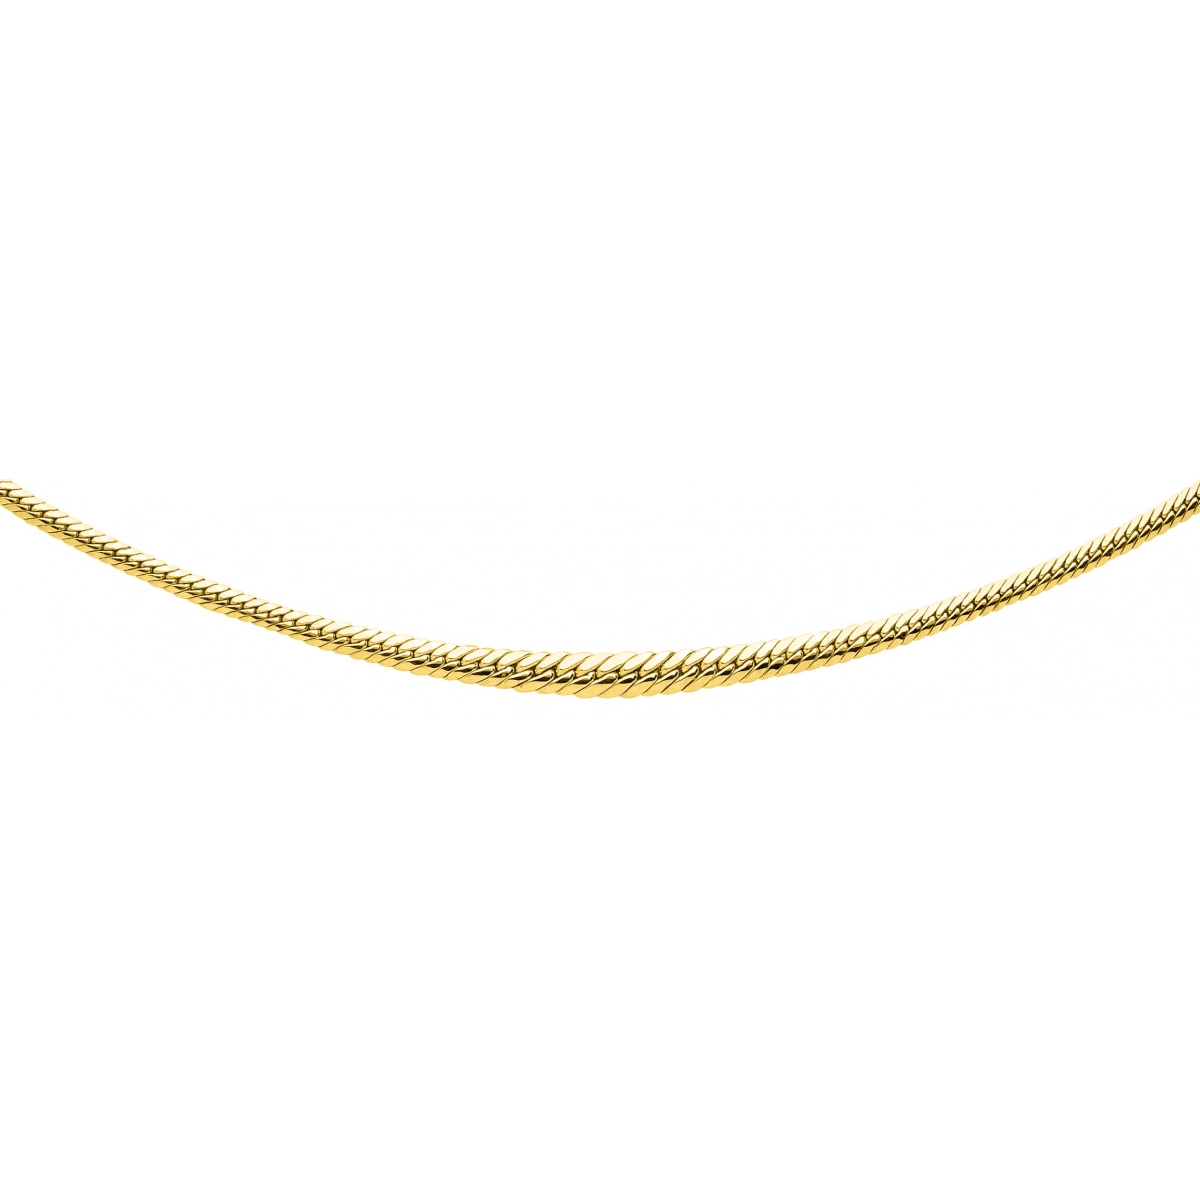 Necklace 'double curb chain' grad 18K YG Lua Blanca  3254 - Size 50